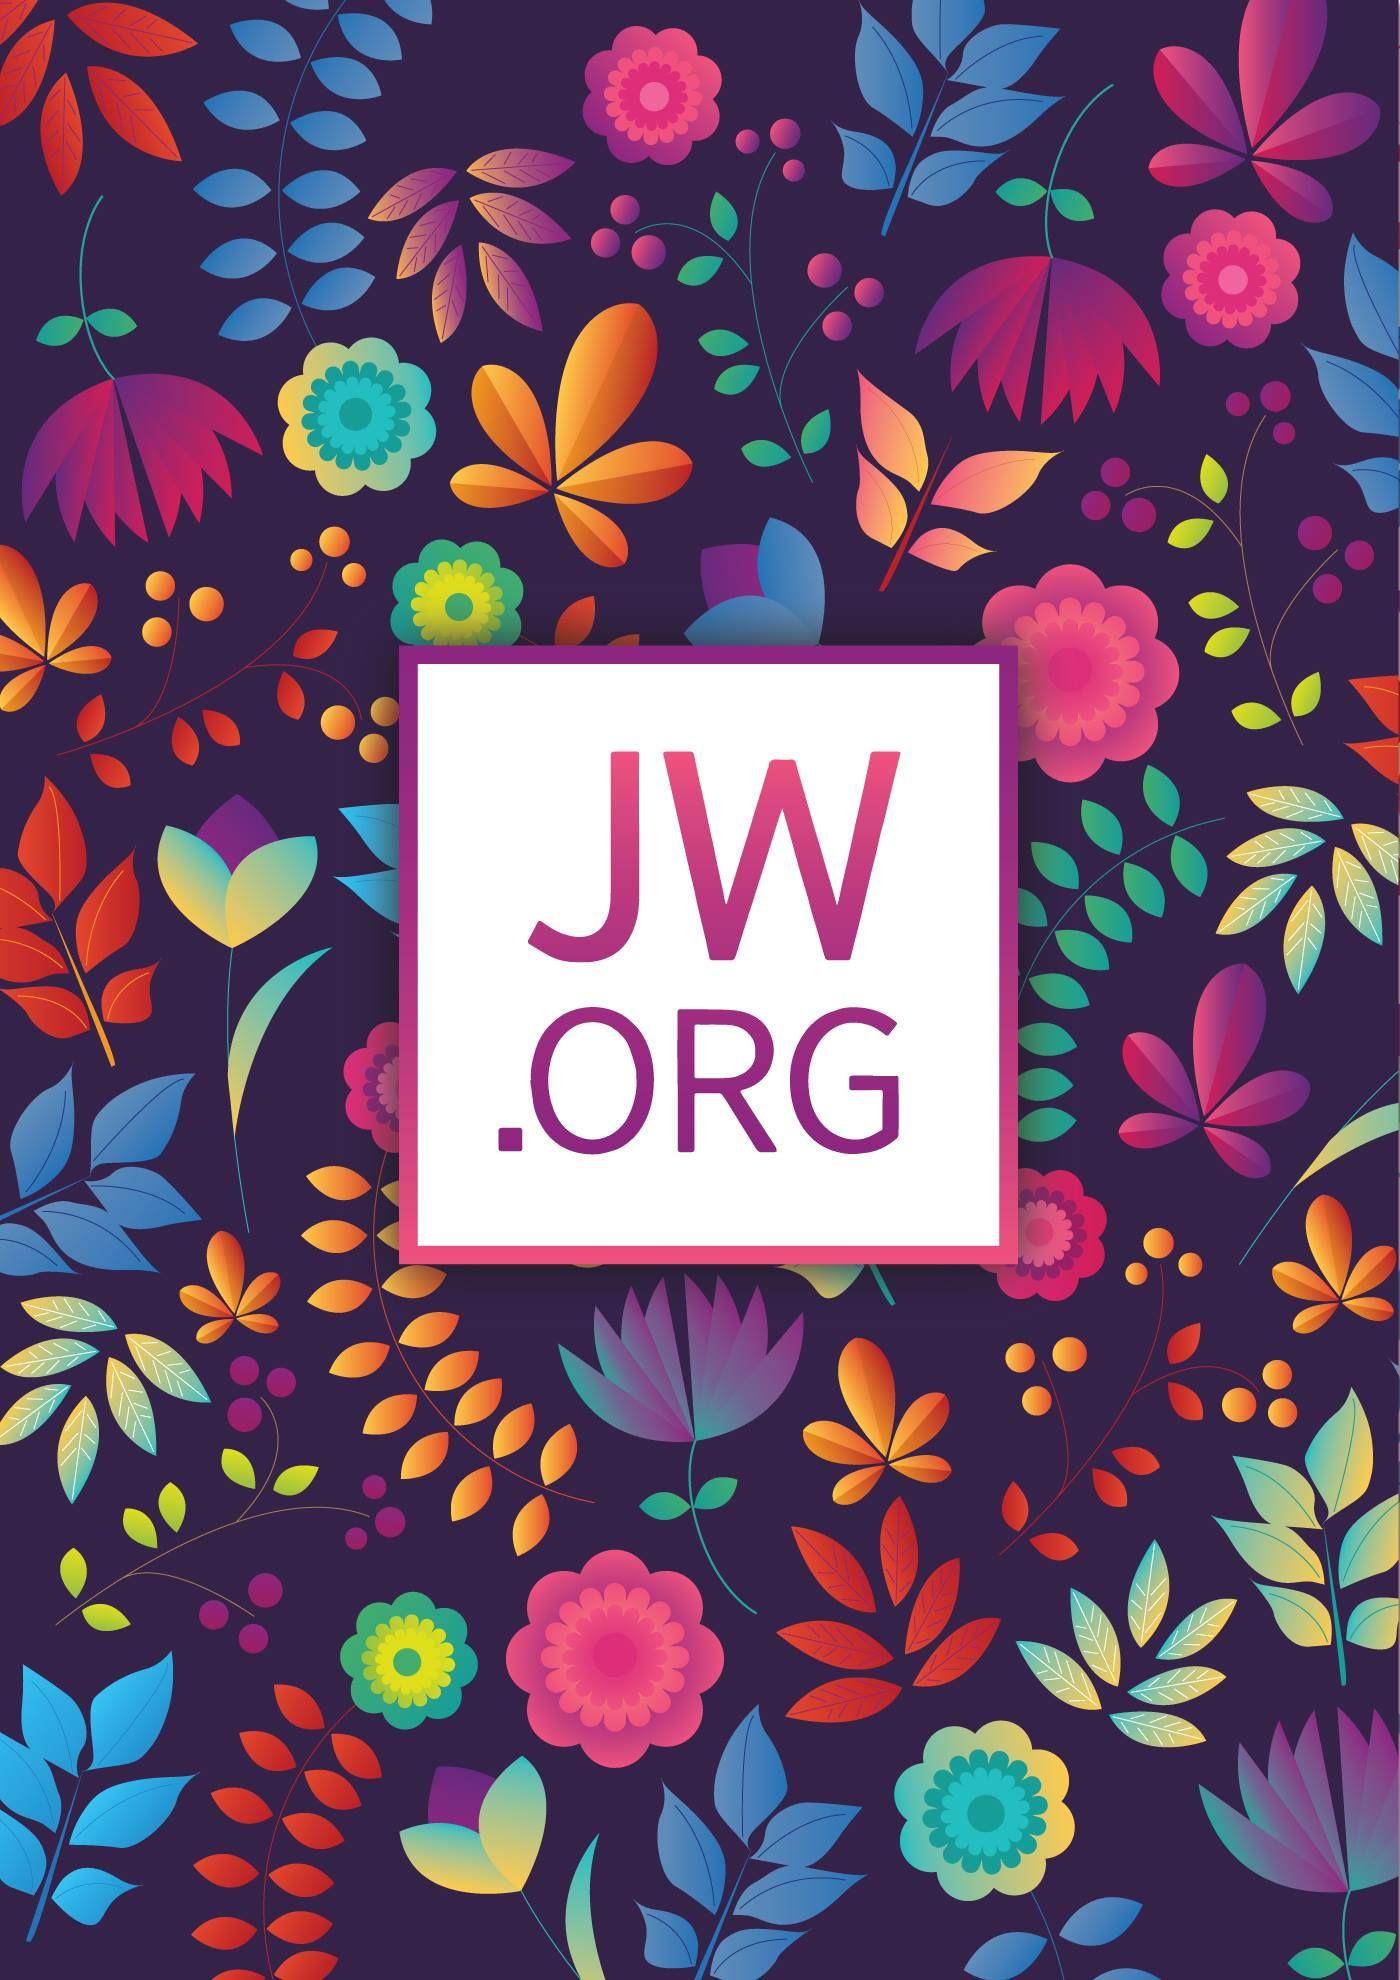 Best jw.org wallpaper image. Jw.org, Jehovah's witnesses